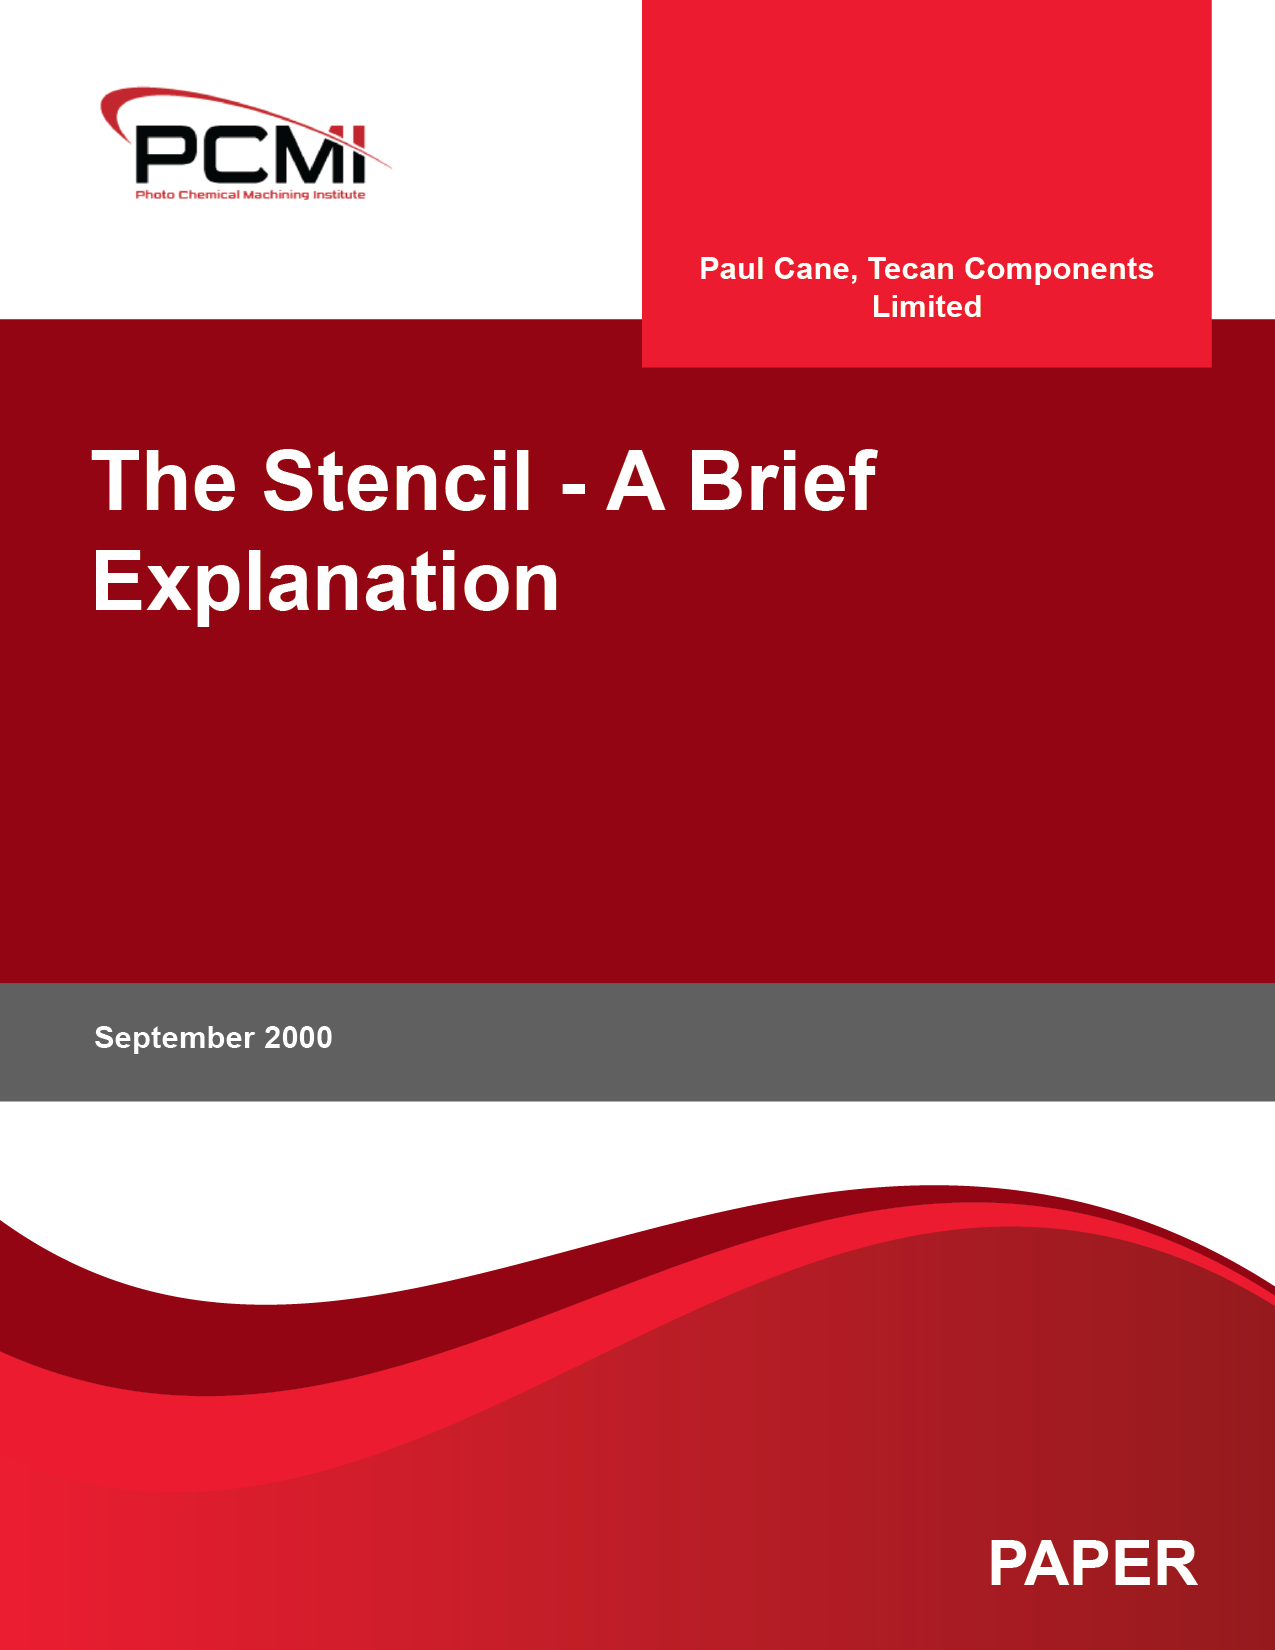 The Stencil – A Brief Explanation